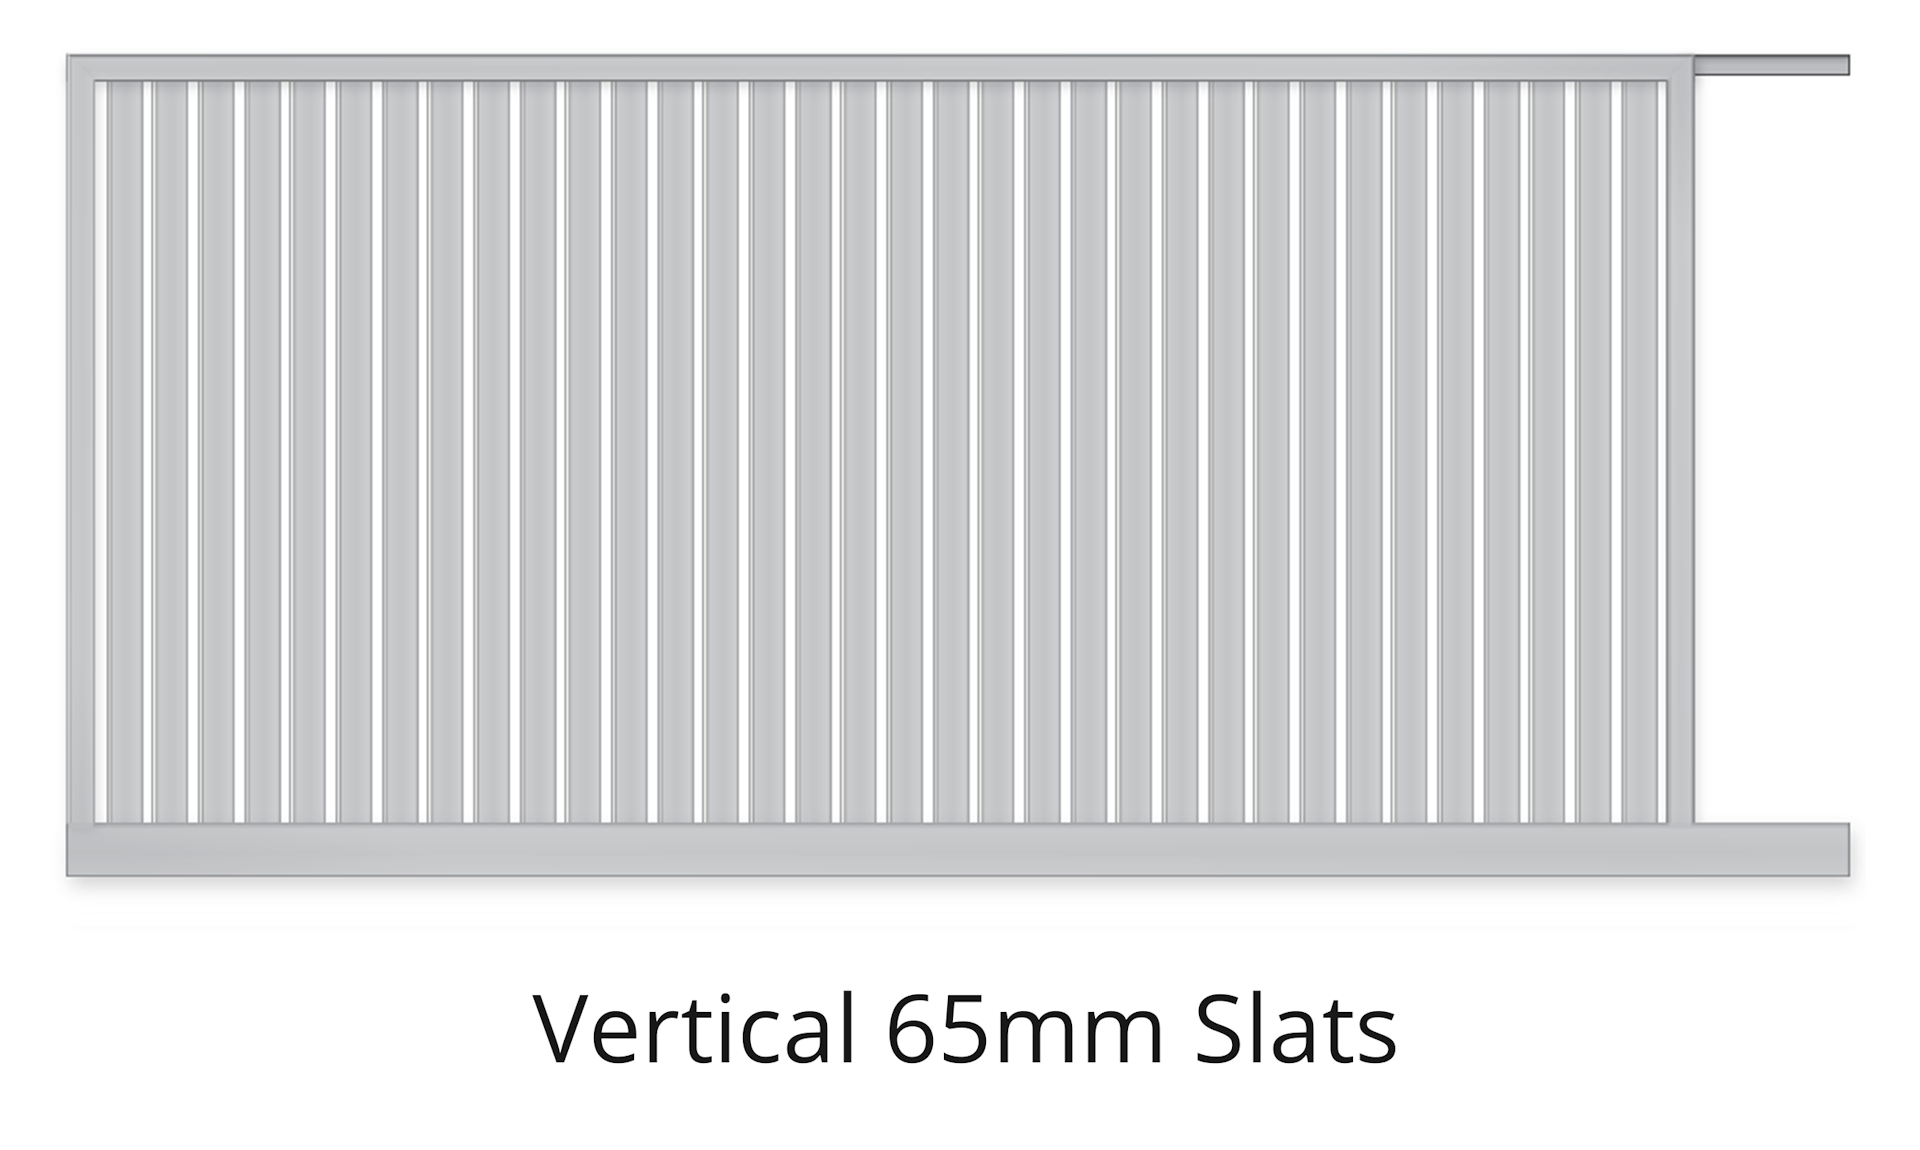 Vertical 65mm slats sliding gate